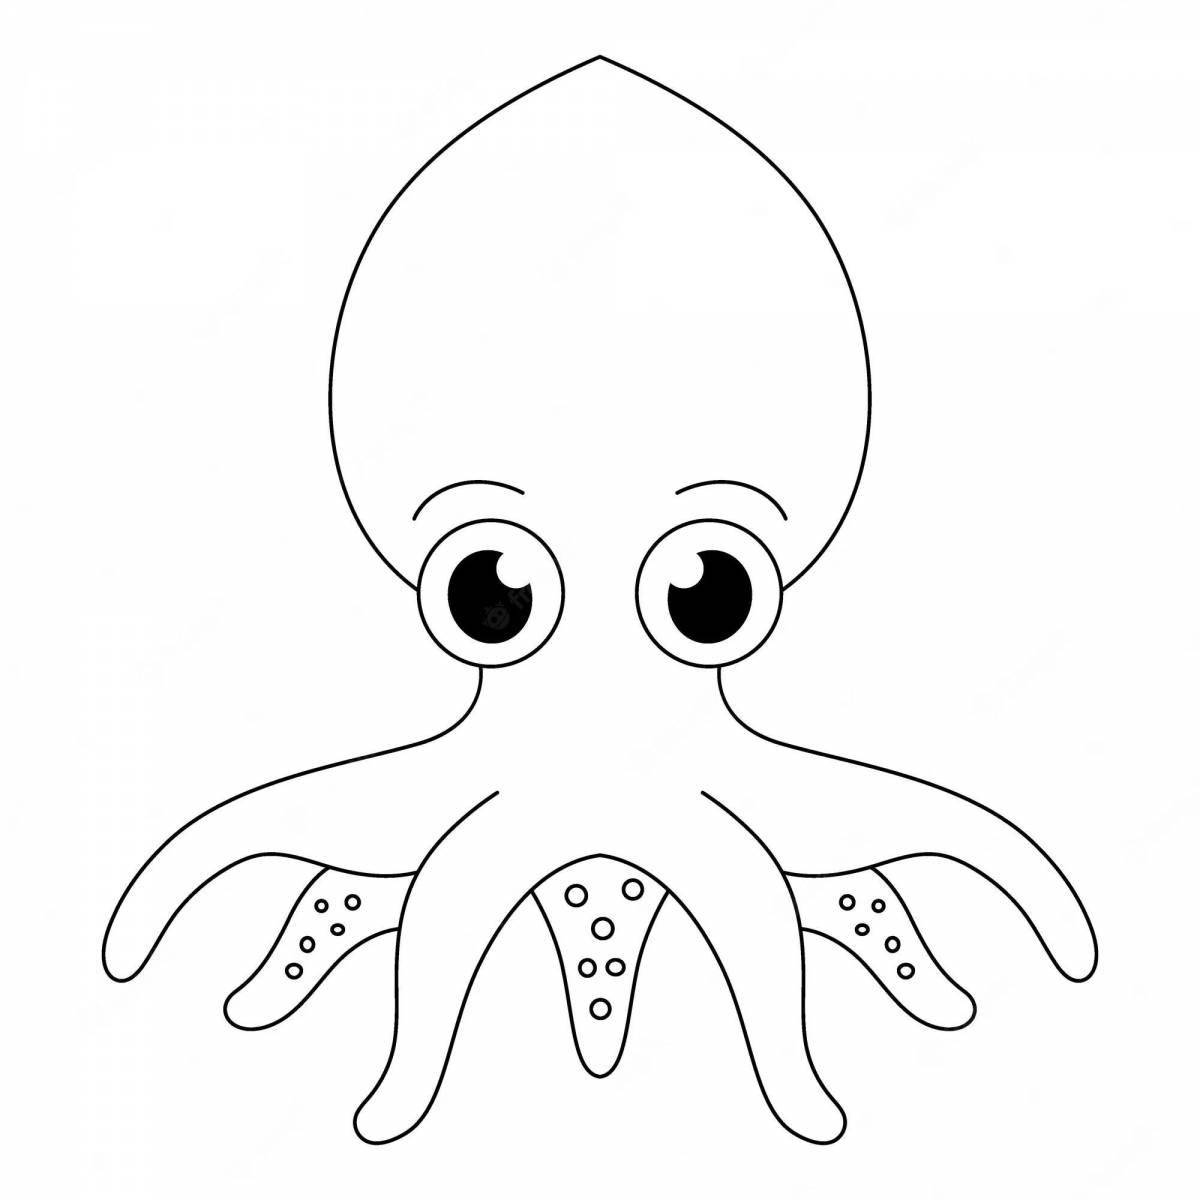 Fun coloring octopus-shifter